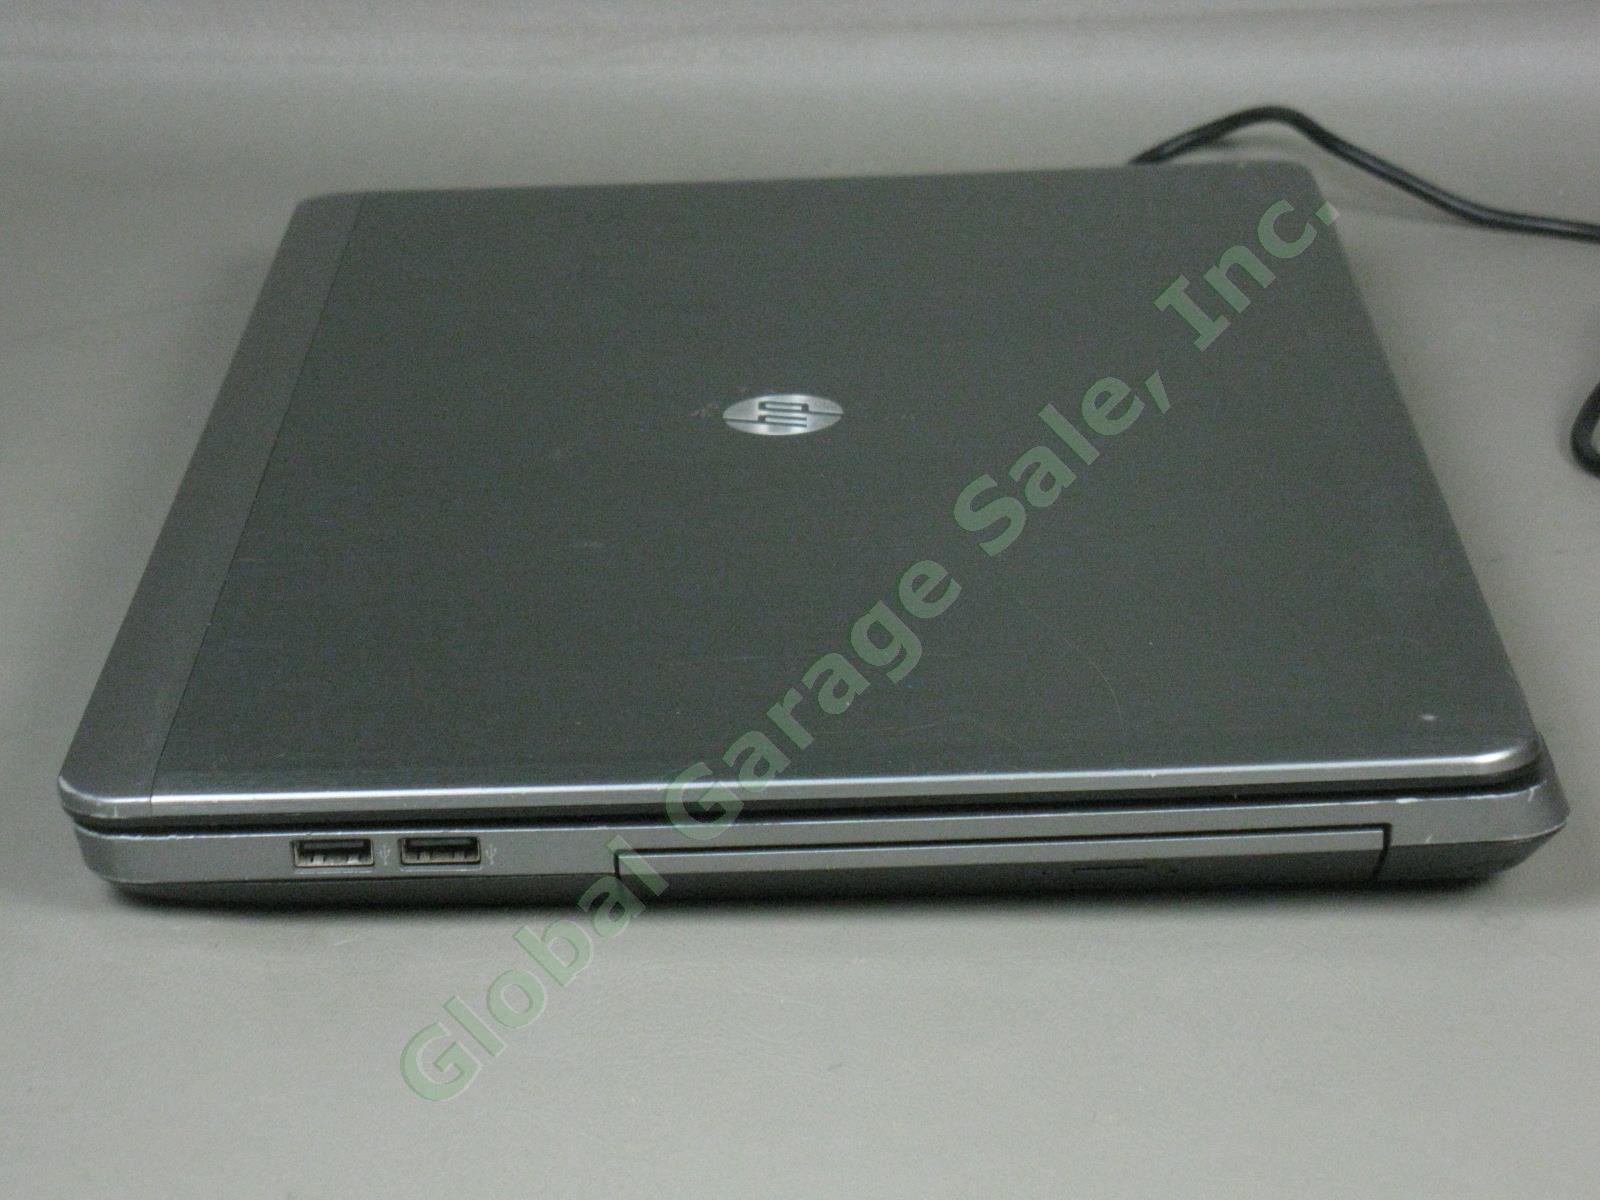 HP ProBook 4540s Laptop Intel i5 2.50GHz 300GB 4GB RAM Windows 10 Pro Refurb 5